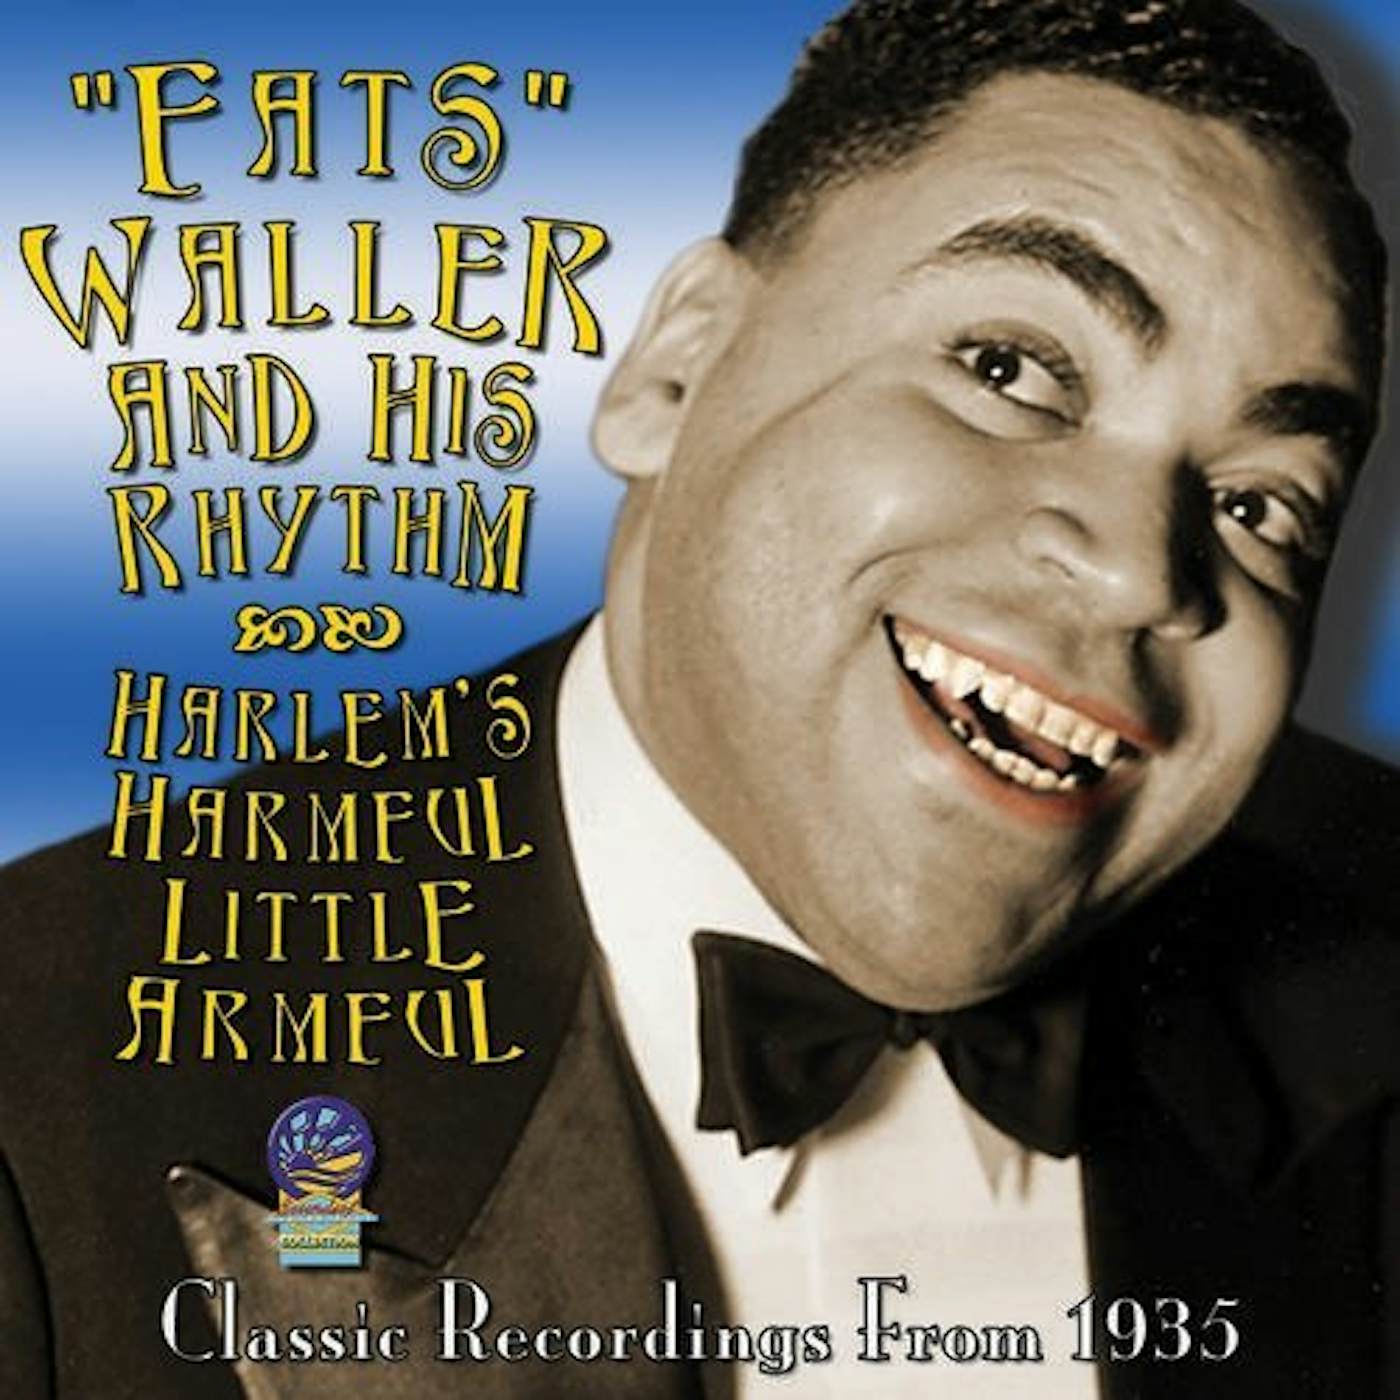 Fats Waller HARLEM'S HARMFUL LITTLE ARMFUL CD